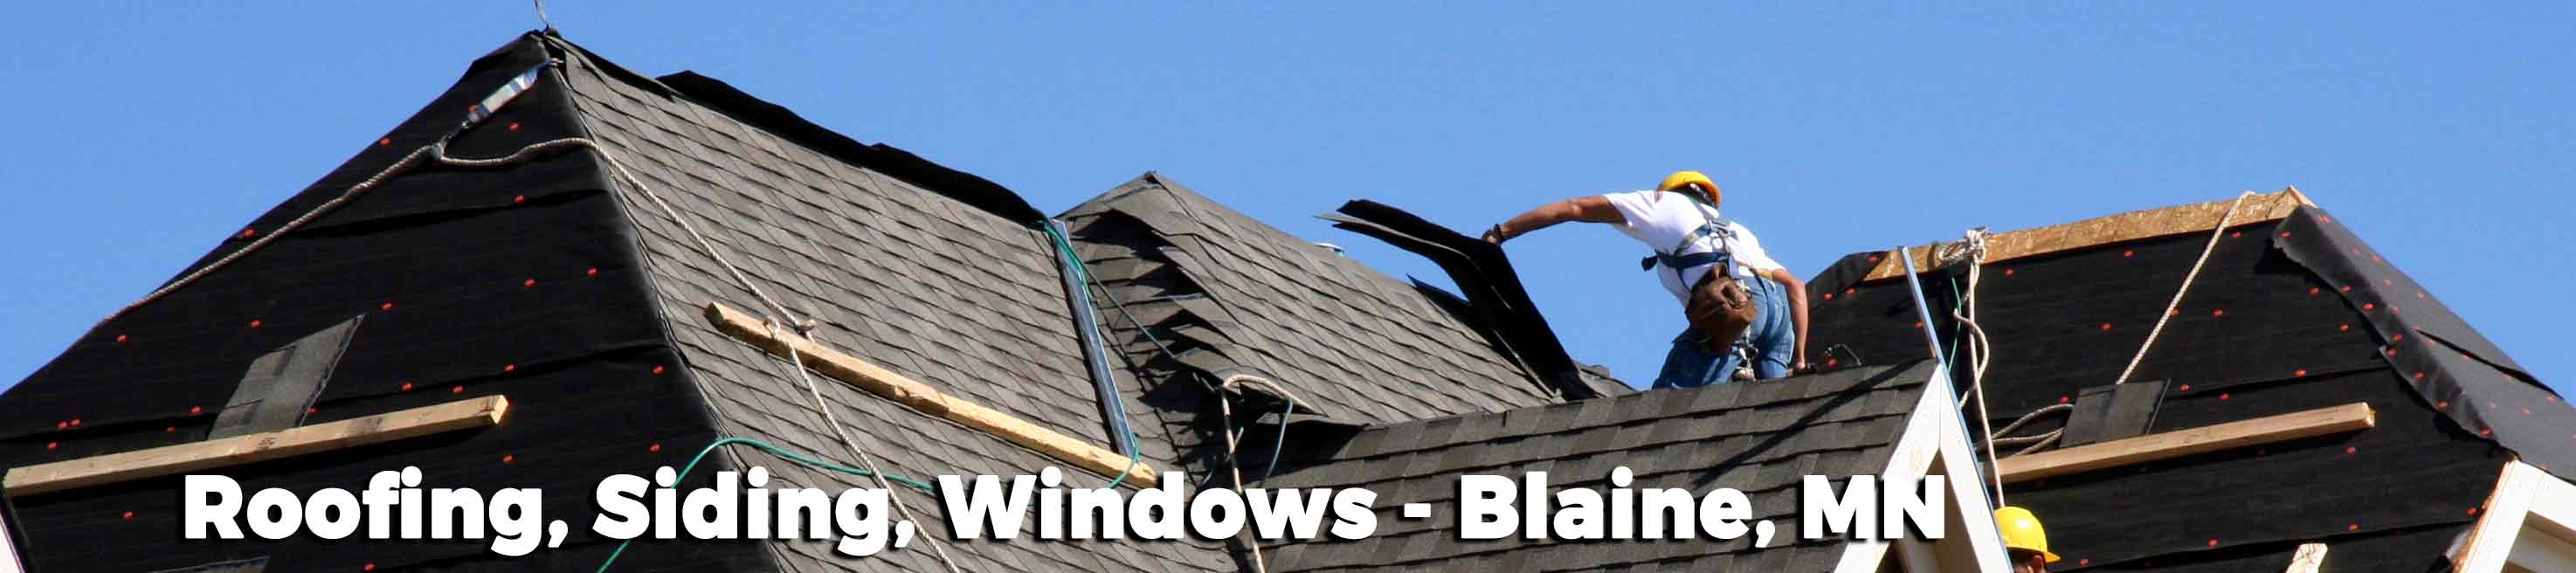 roofing-siding-windows-blaine-mn